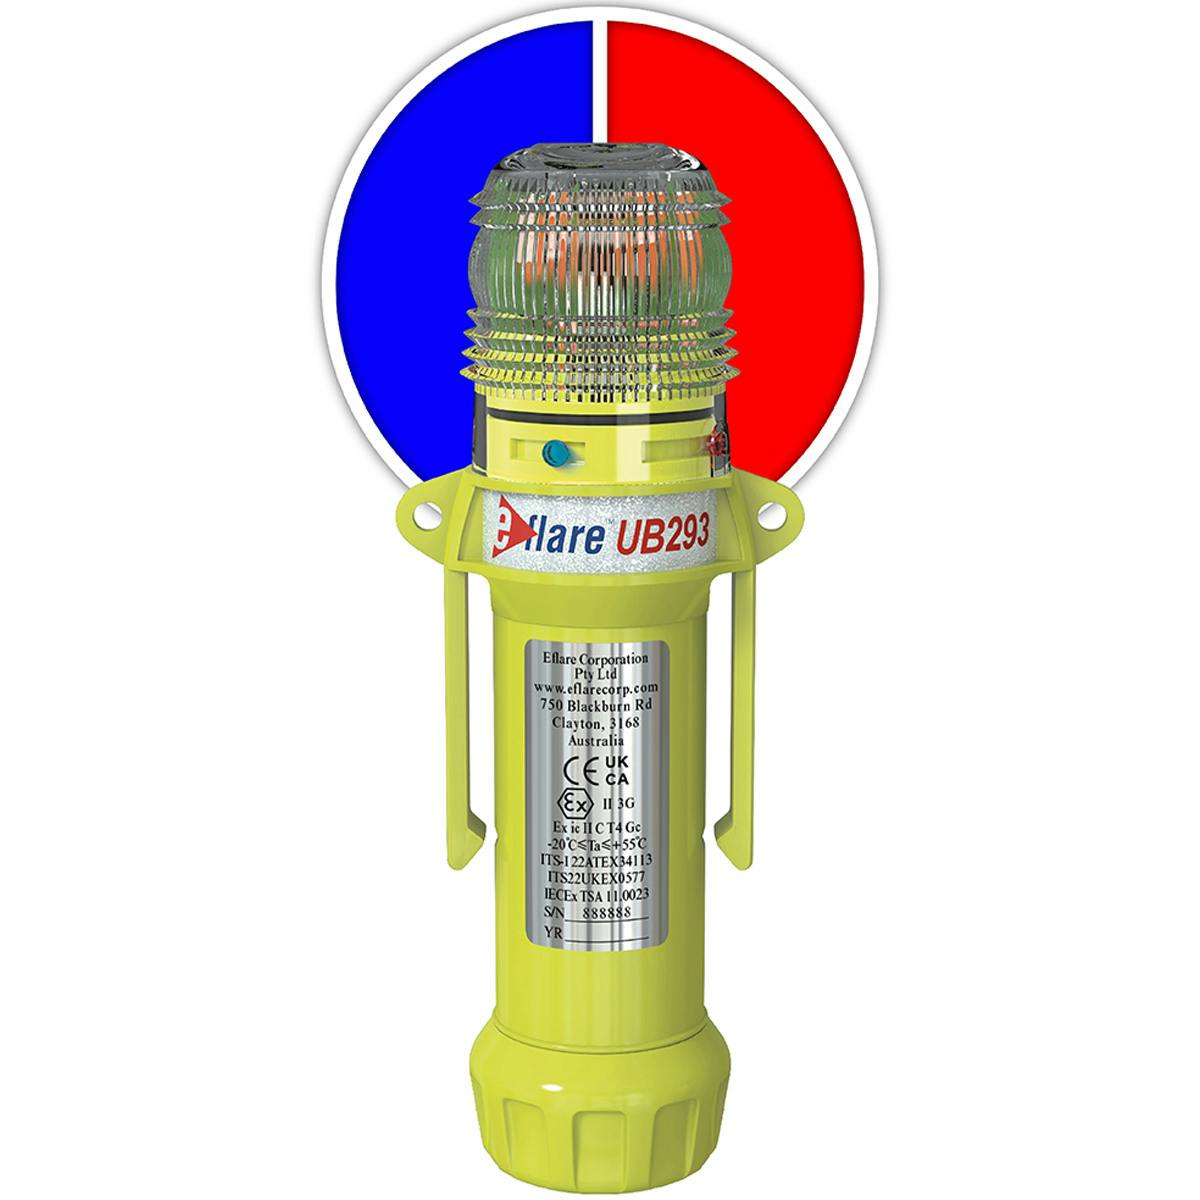 8" Safety & Emergency Beacon - Alternating Red/Blue, Blue (939-UB293-R/B) - 8